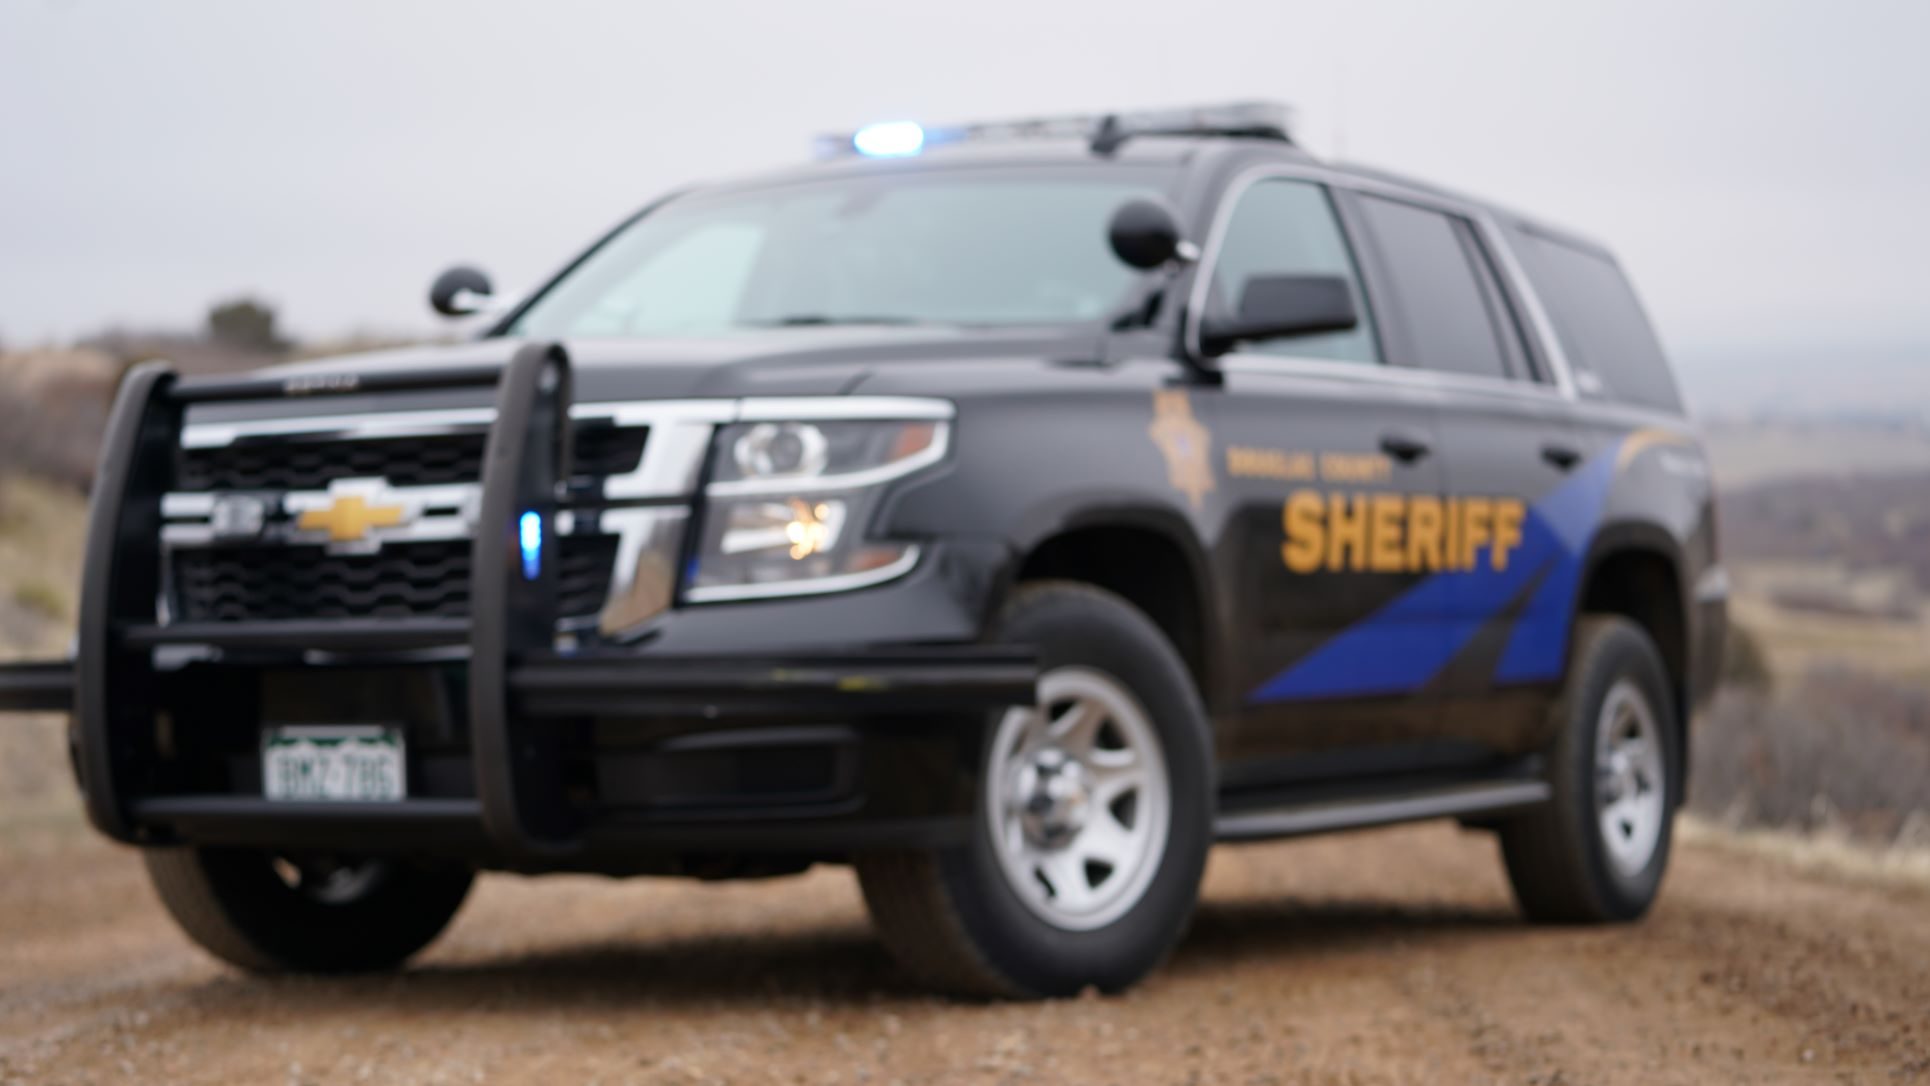 Image of Douglas County Sheriff's office vehicle